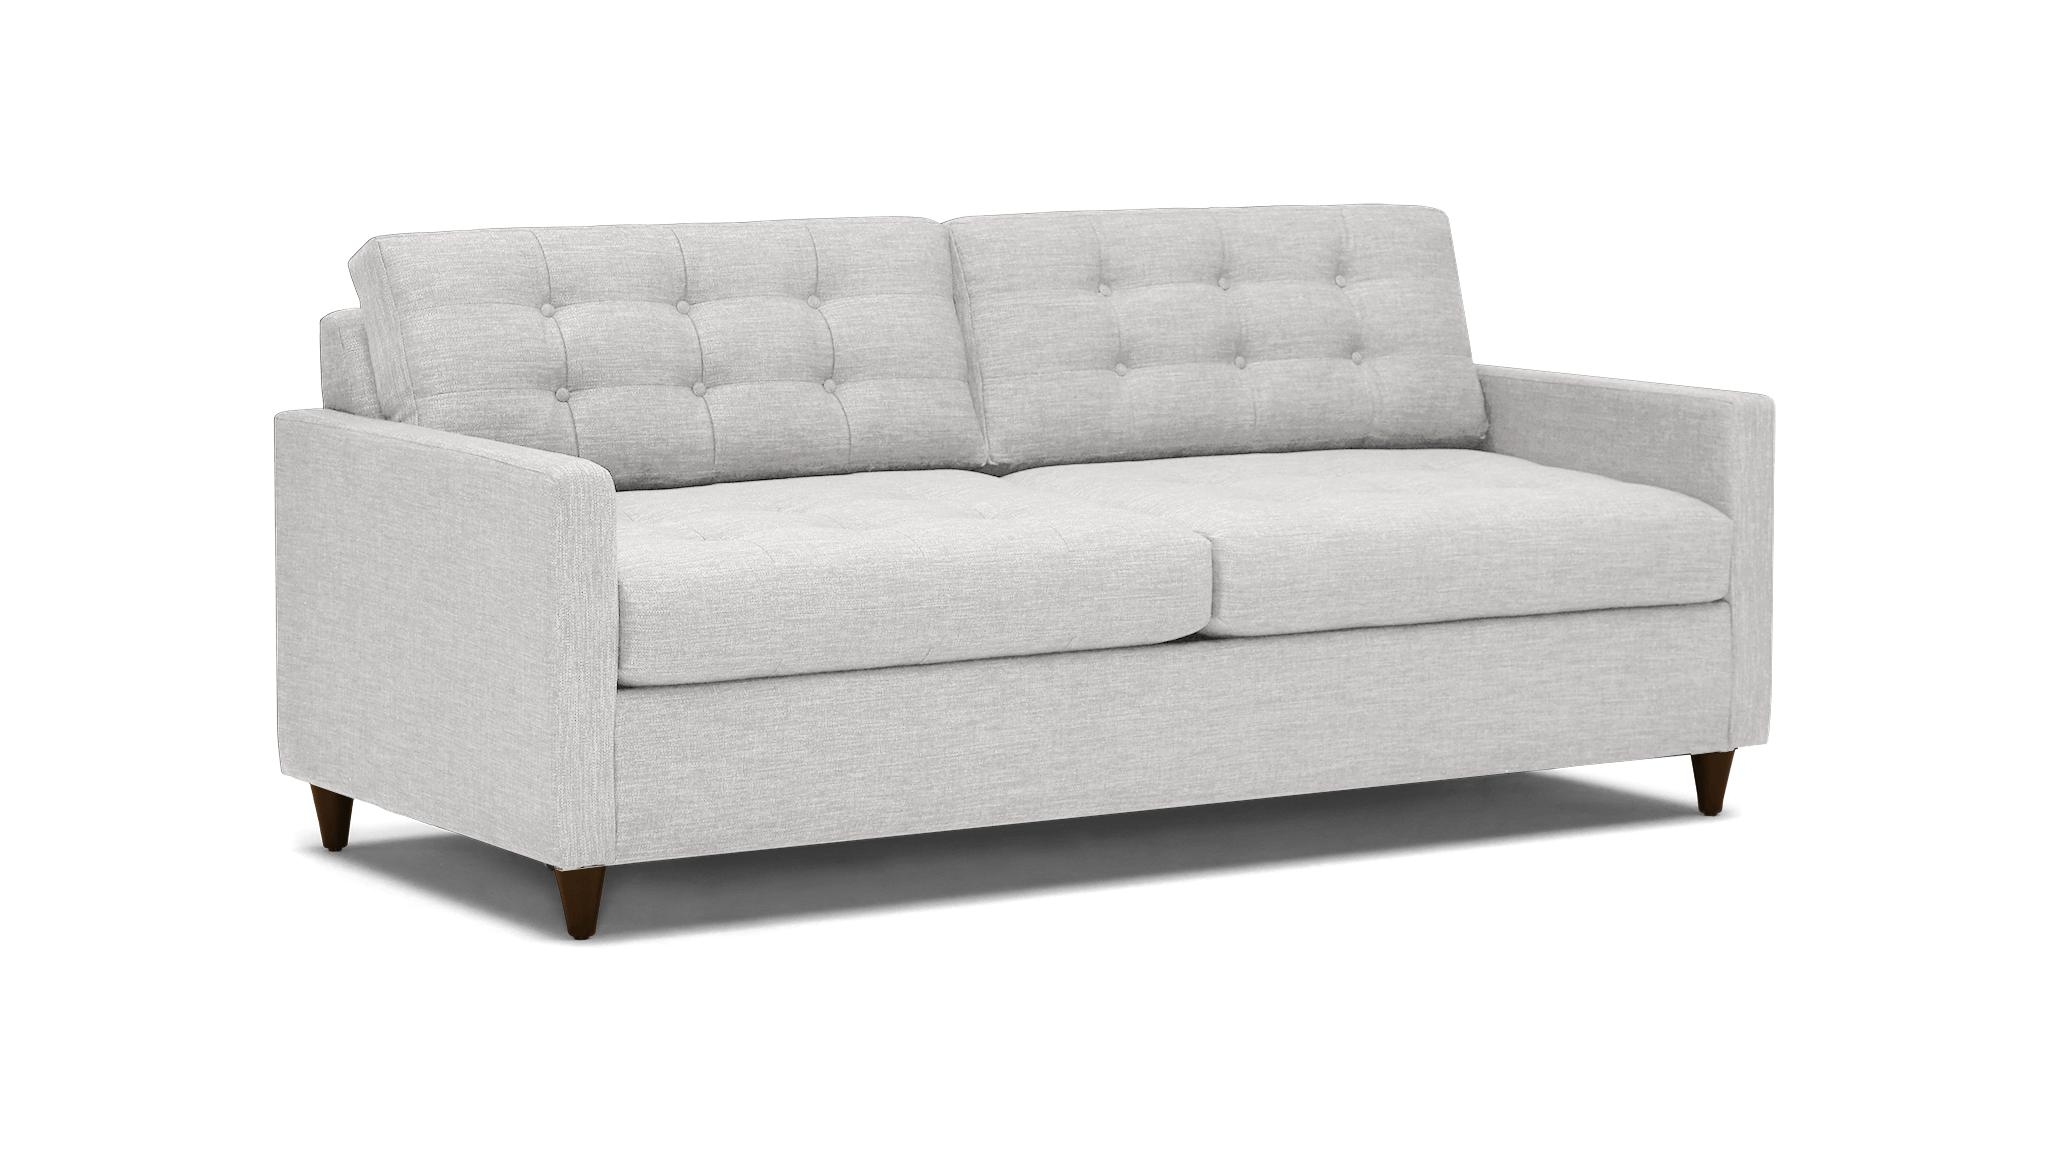 Gray Eliot Mid Century Modern Sleeper Sofa - Sunbrella Premier Fog - Mocha - Foam - Image 1